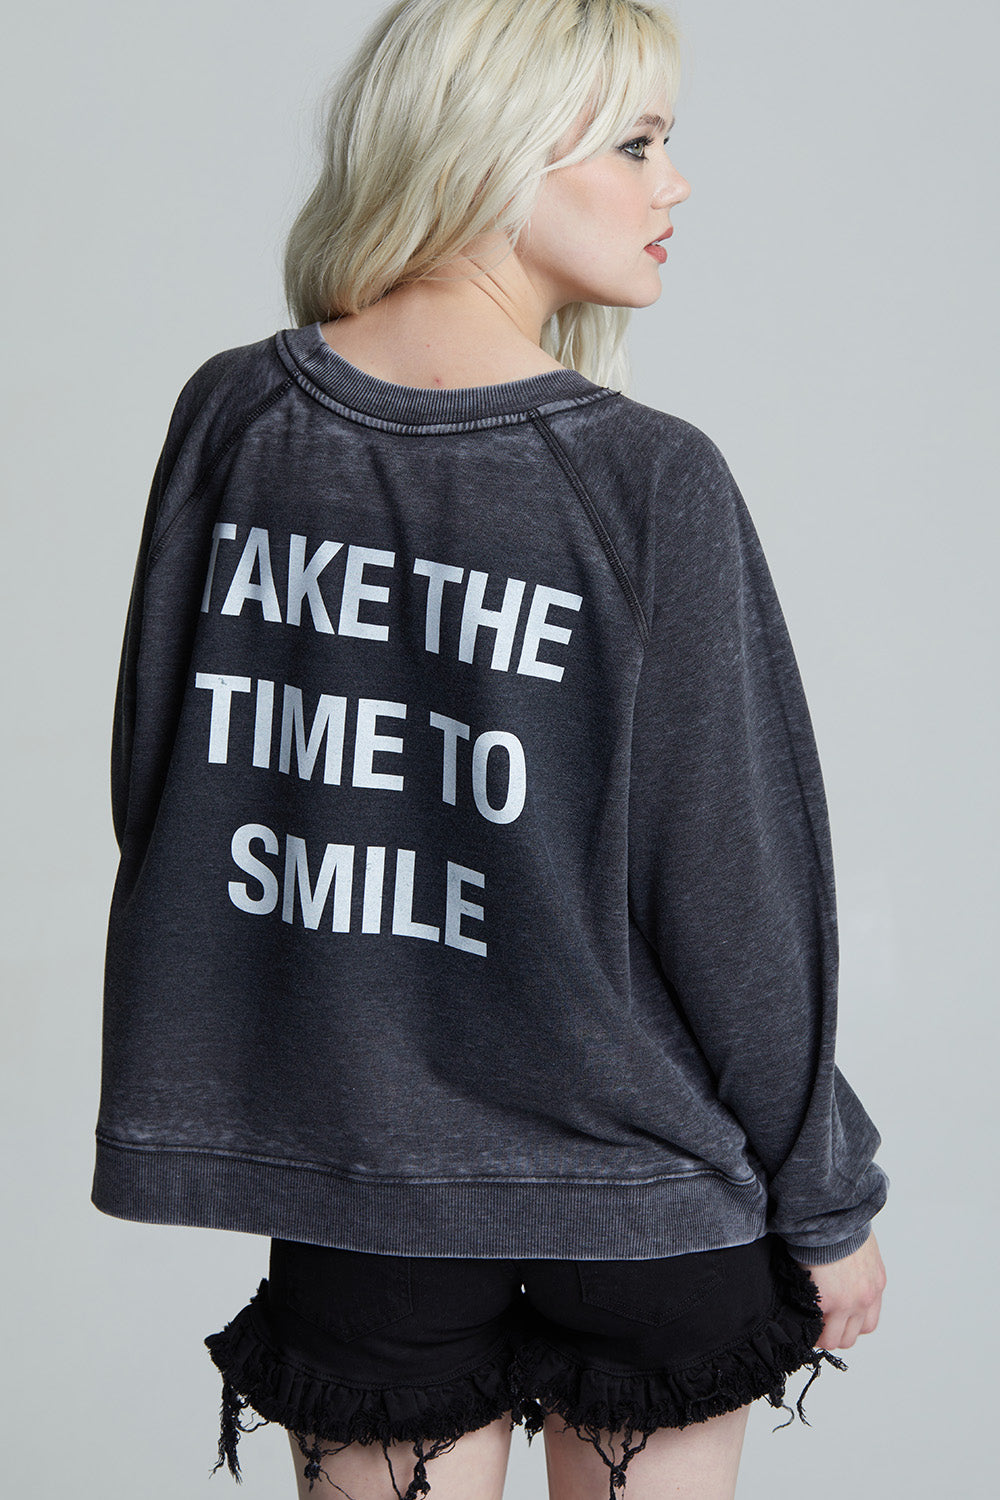 Smiley Take the Time to Smile Sweatshirt